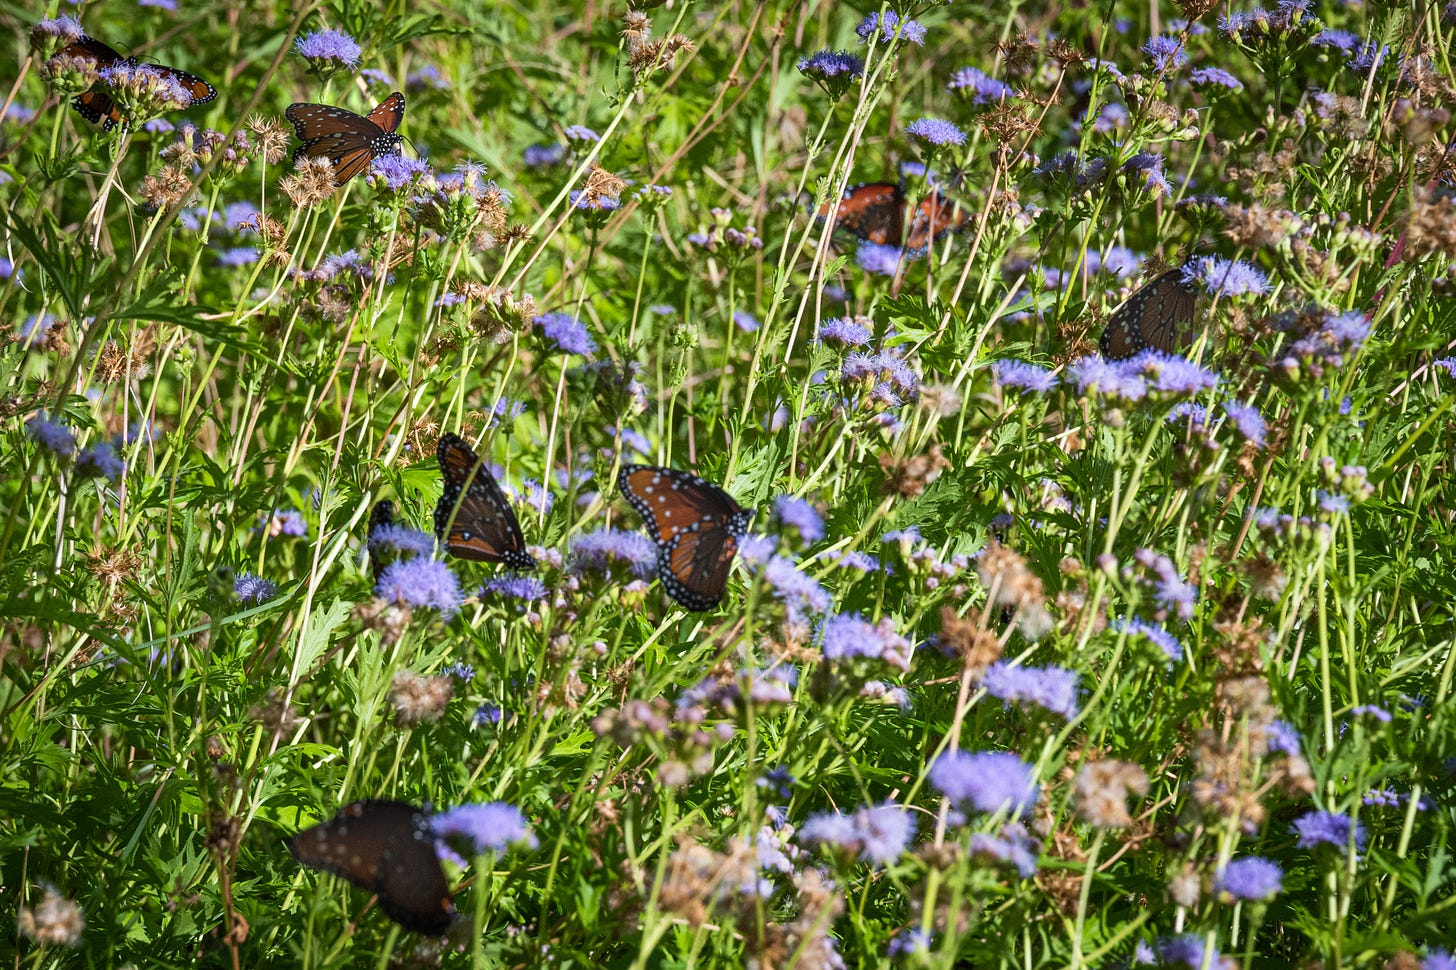 A garden of blue wildflowers with butterflies